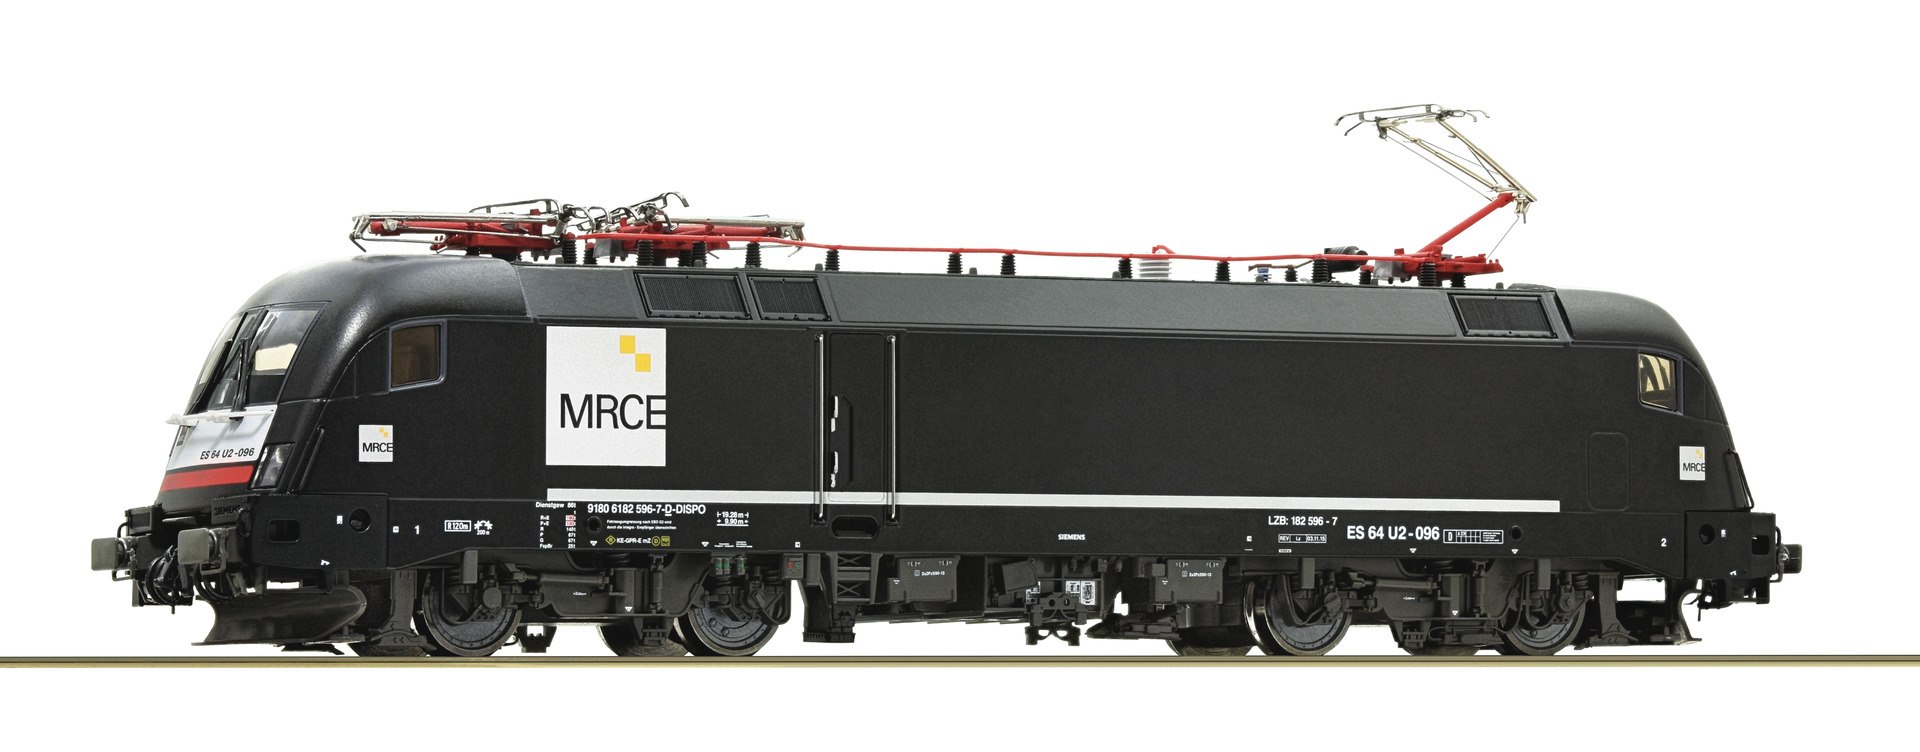 Roco 70518  Electric locomotive 182 596-7, MRCE